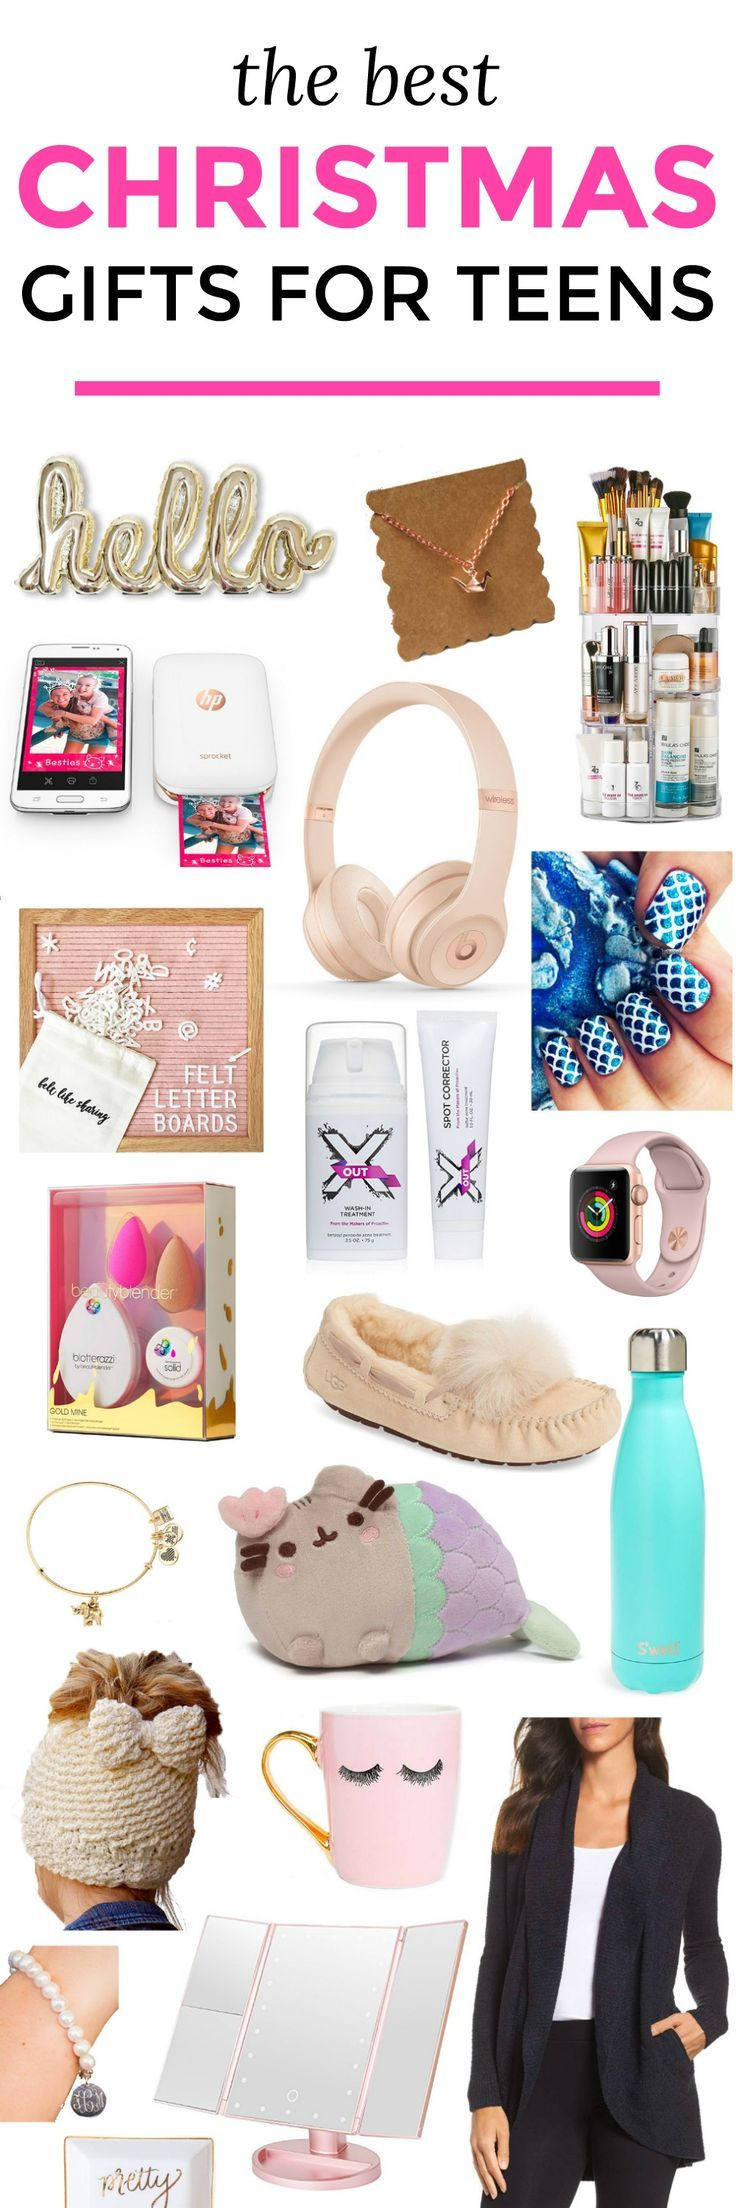 Teenager Christmas Gift Ideas
 The 25 best Teenage girl ts ideas on Pinterest